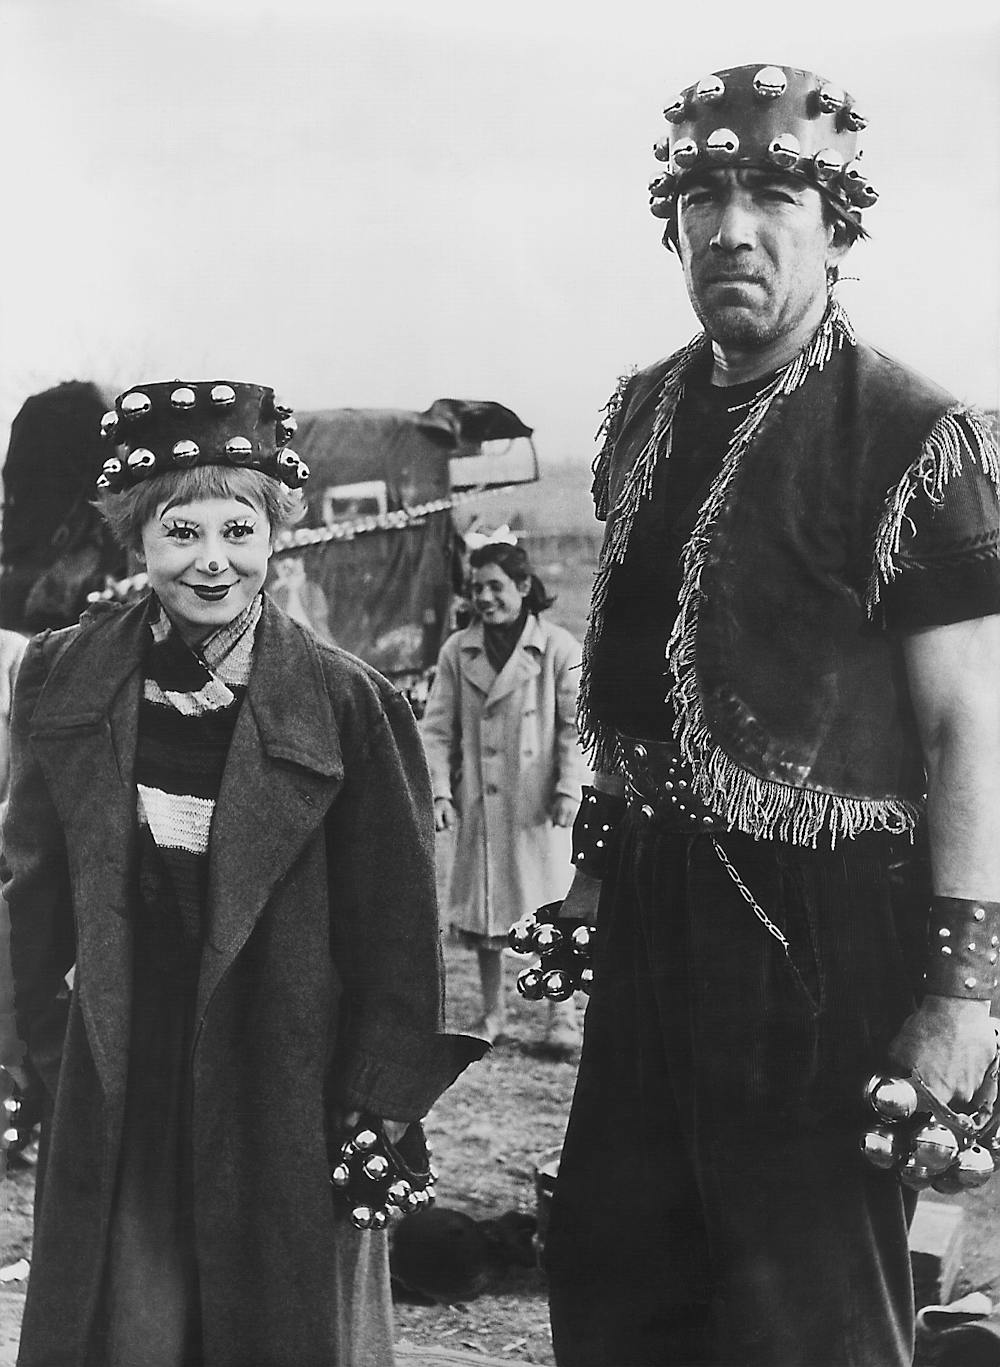 Fellini's La Strada: a vision of masculinity and femininity that still  haunts us today